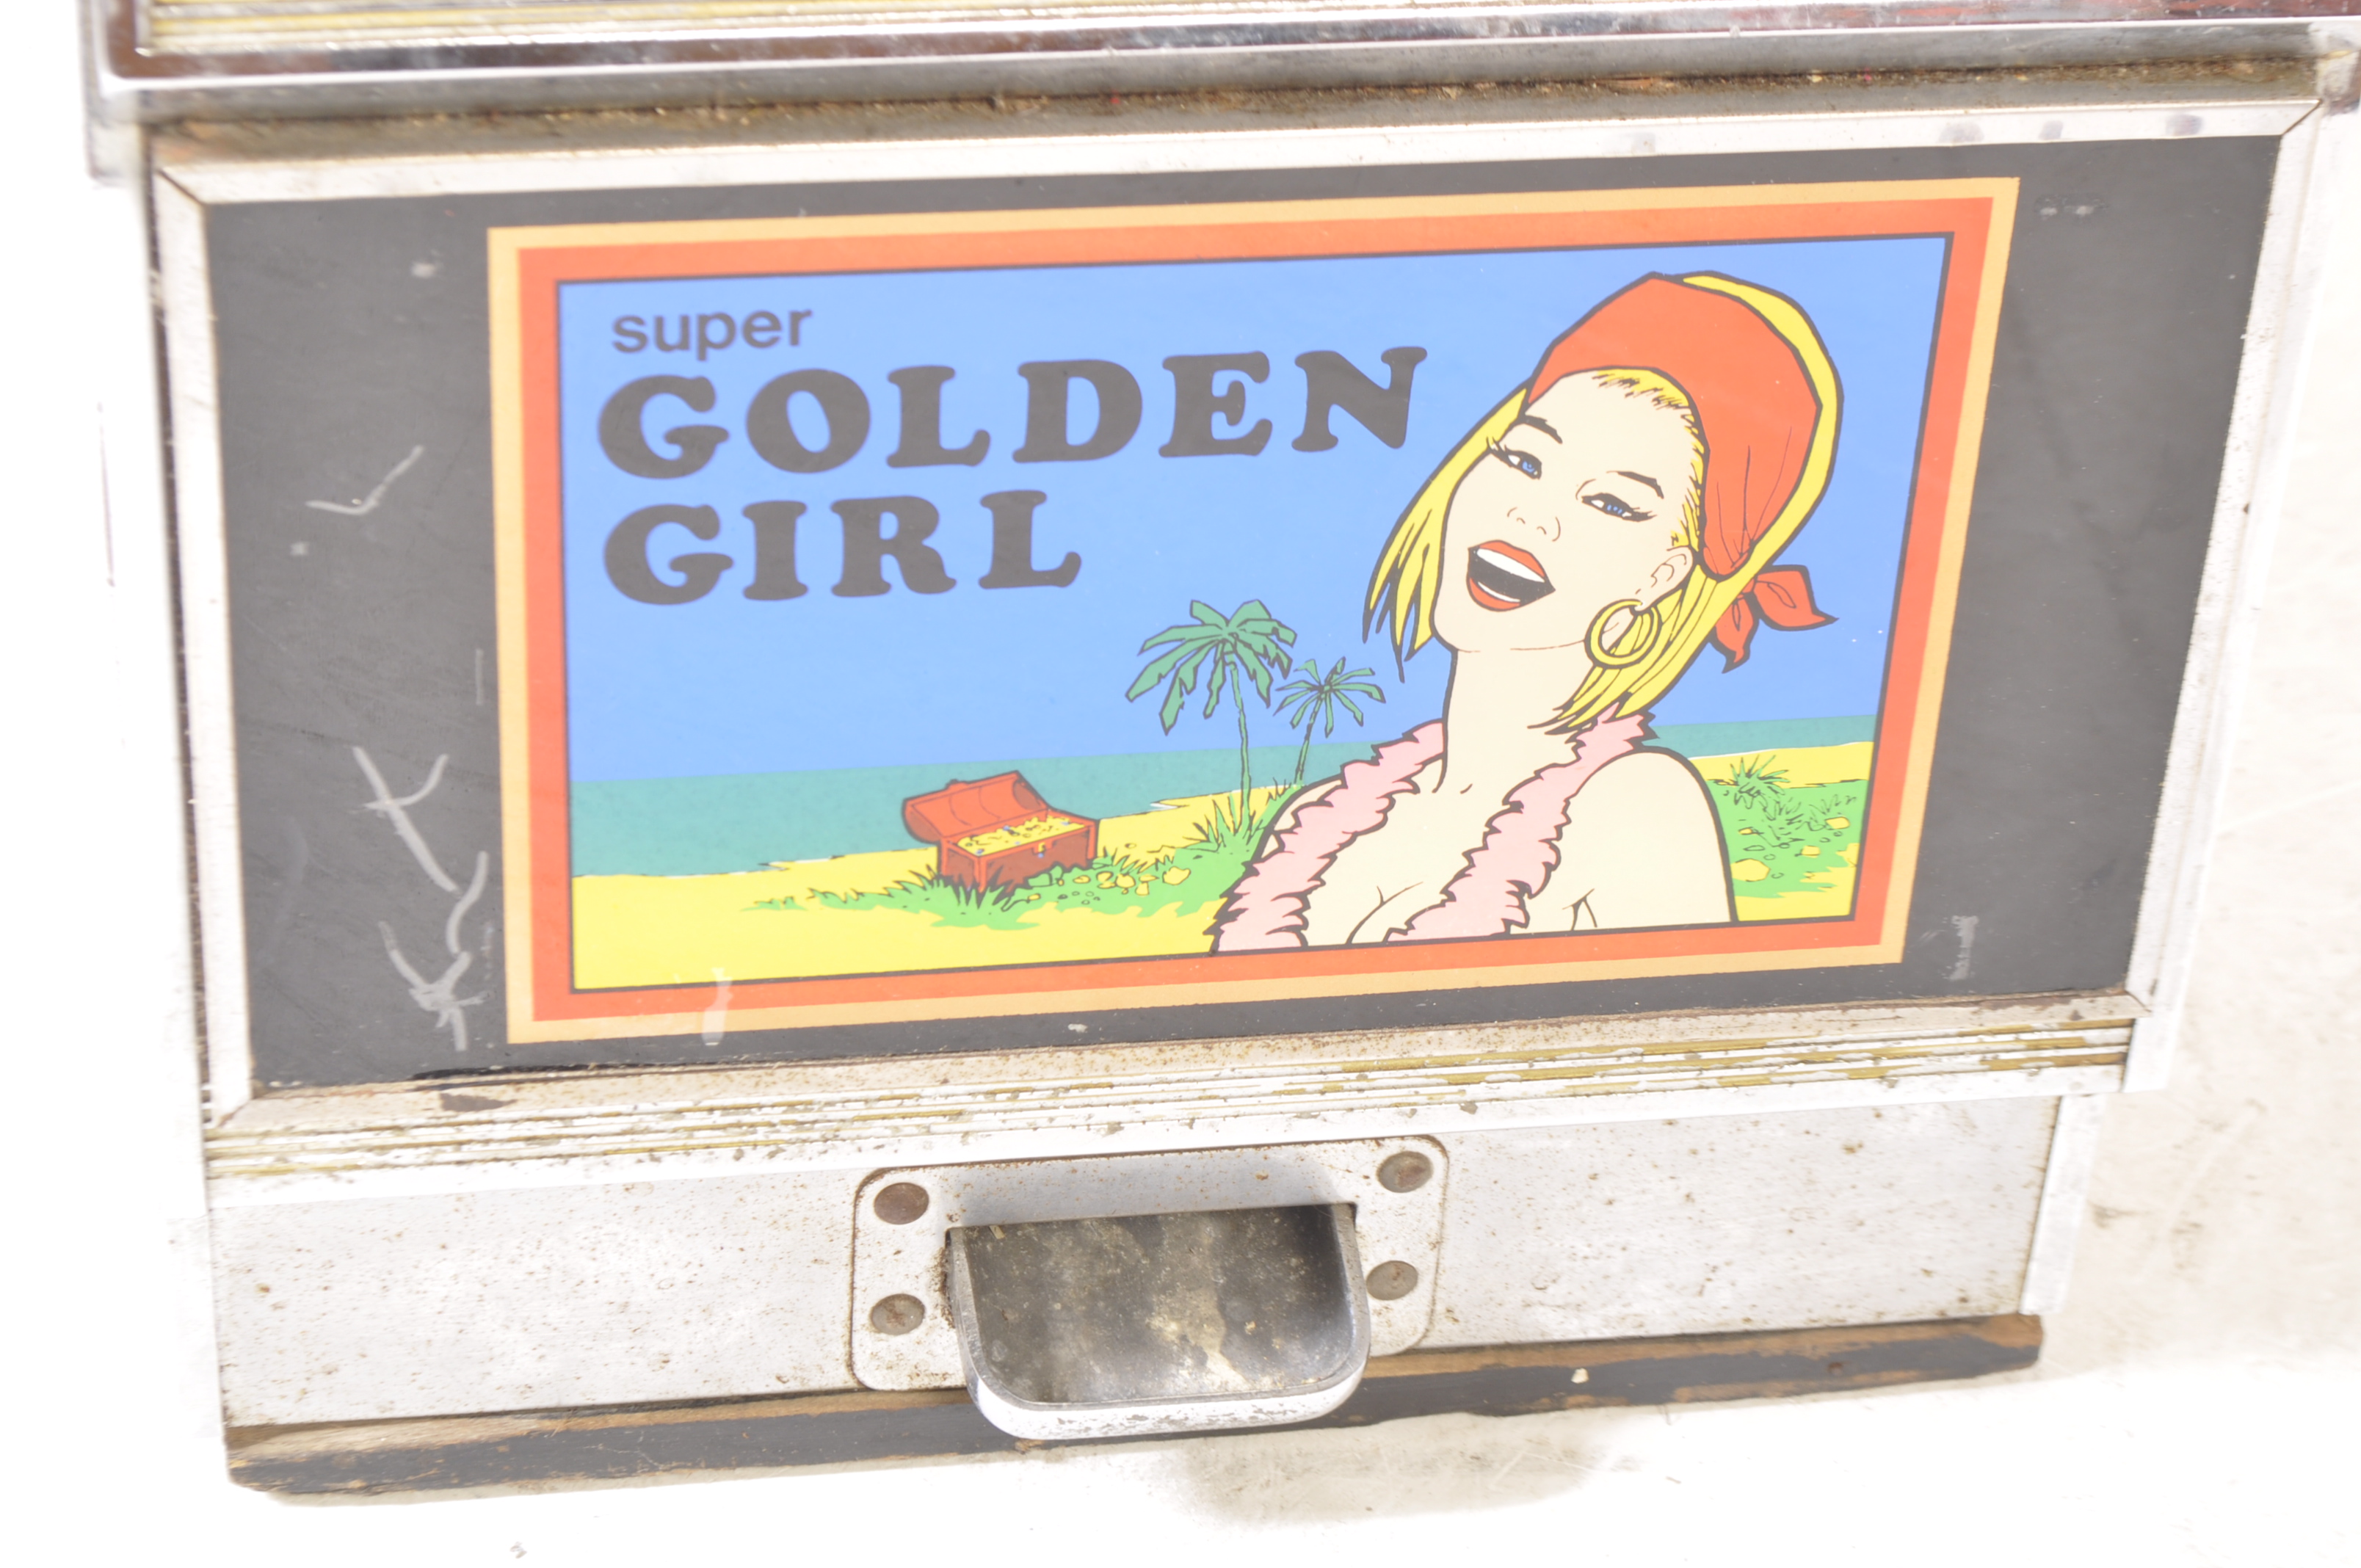 BALLY - SUPER GOLDEN GIRL - VINTAGE ONE ARM BANDIT SLOT MACHINE - Image 5 of 9